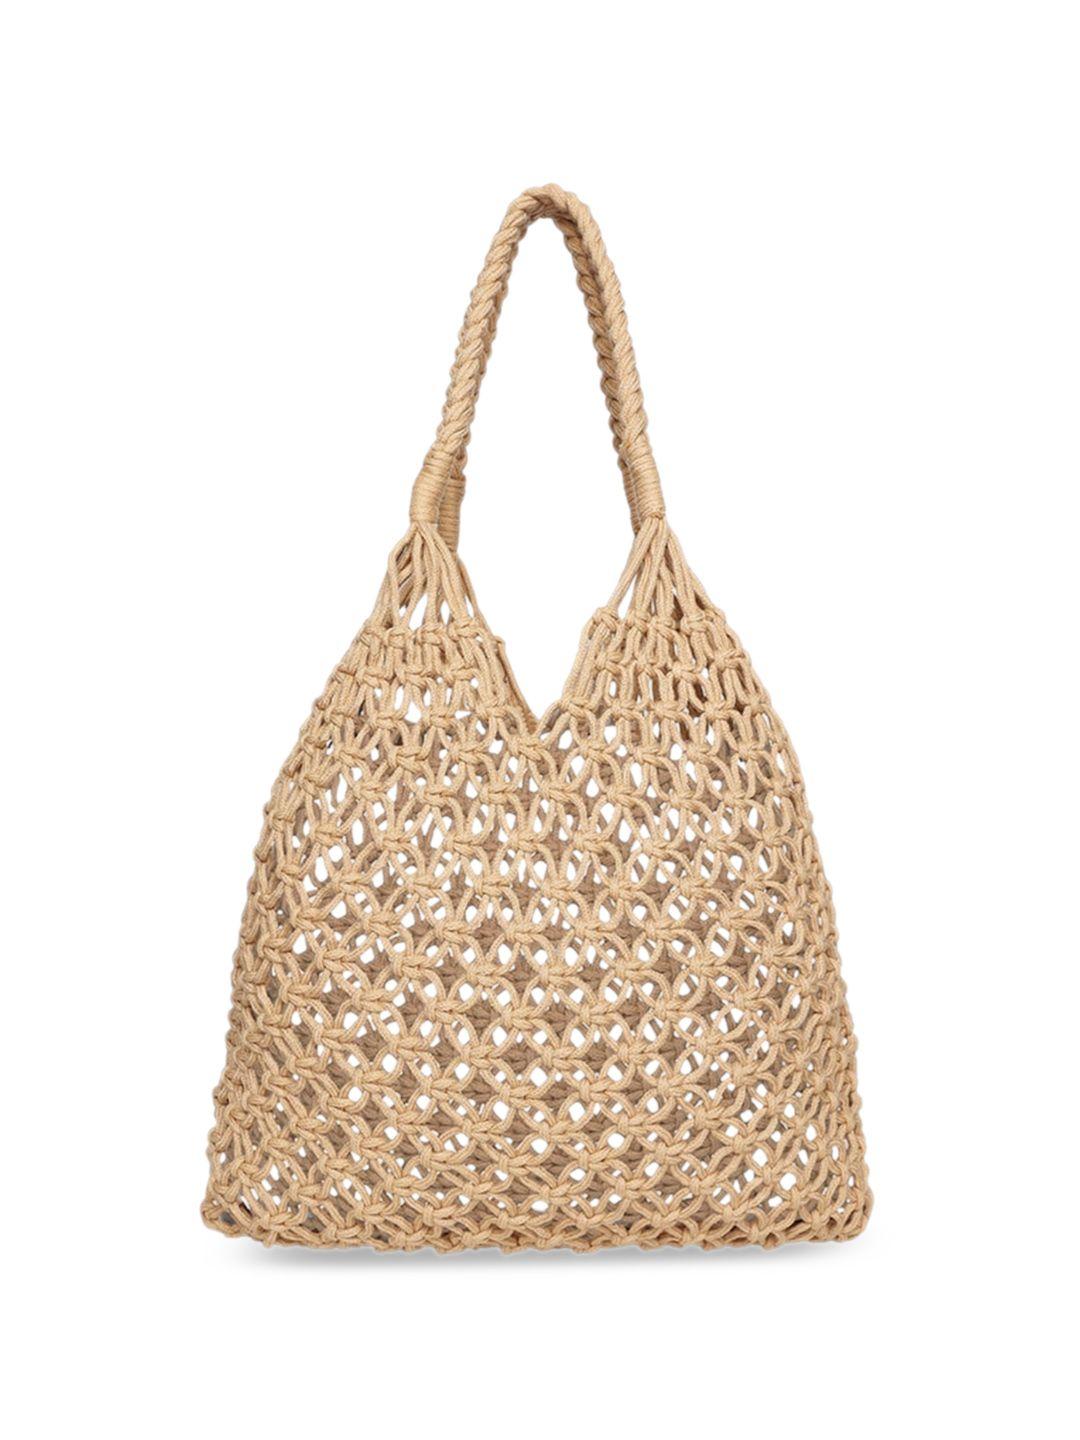 london-rag-self-design-braided-shopper-tote-bag